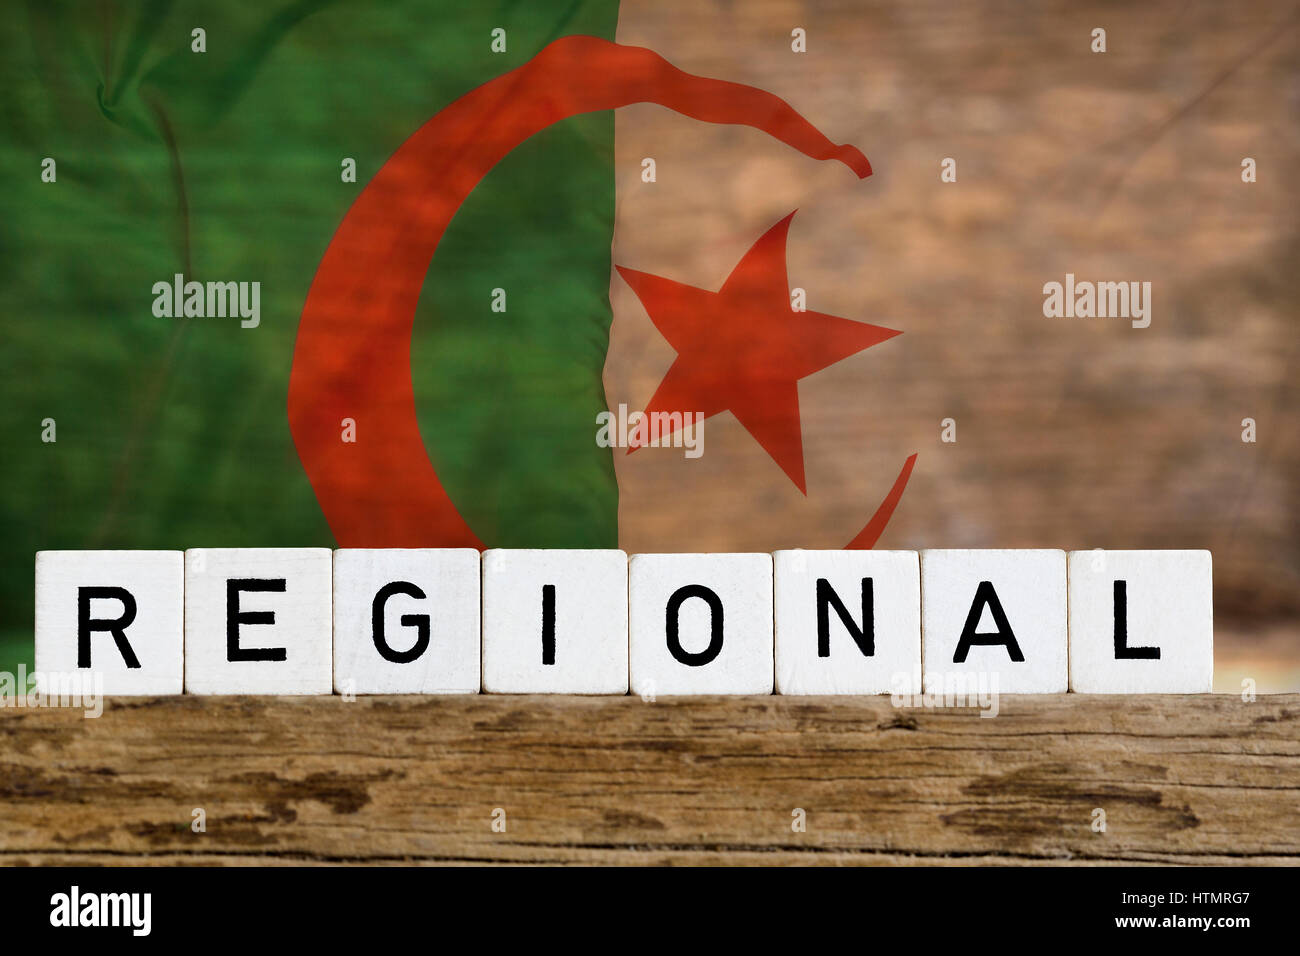 Regional concept, Algeria, on wooden background Stock Photo